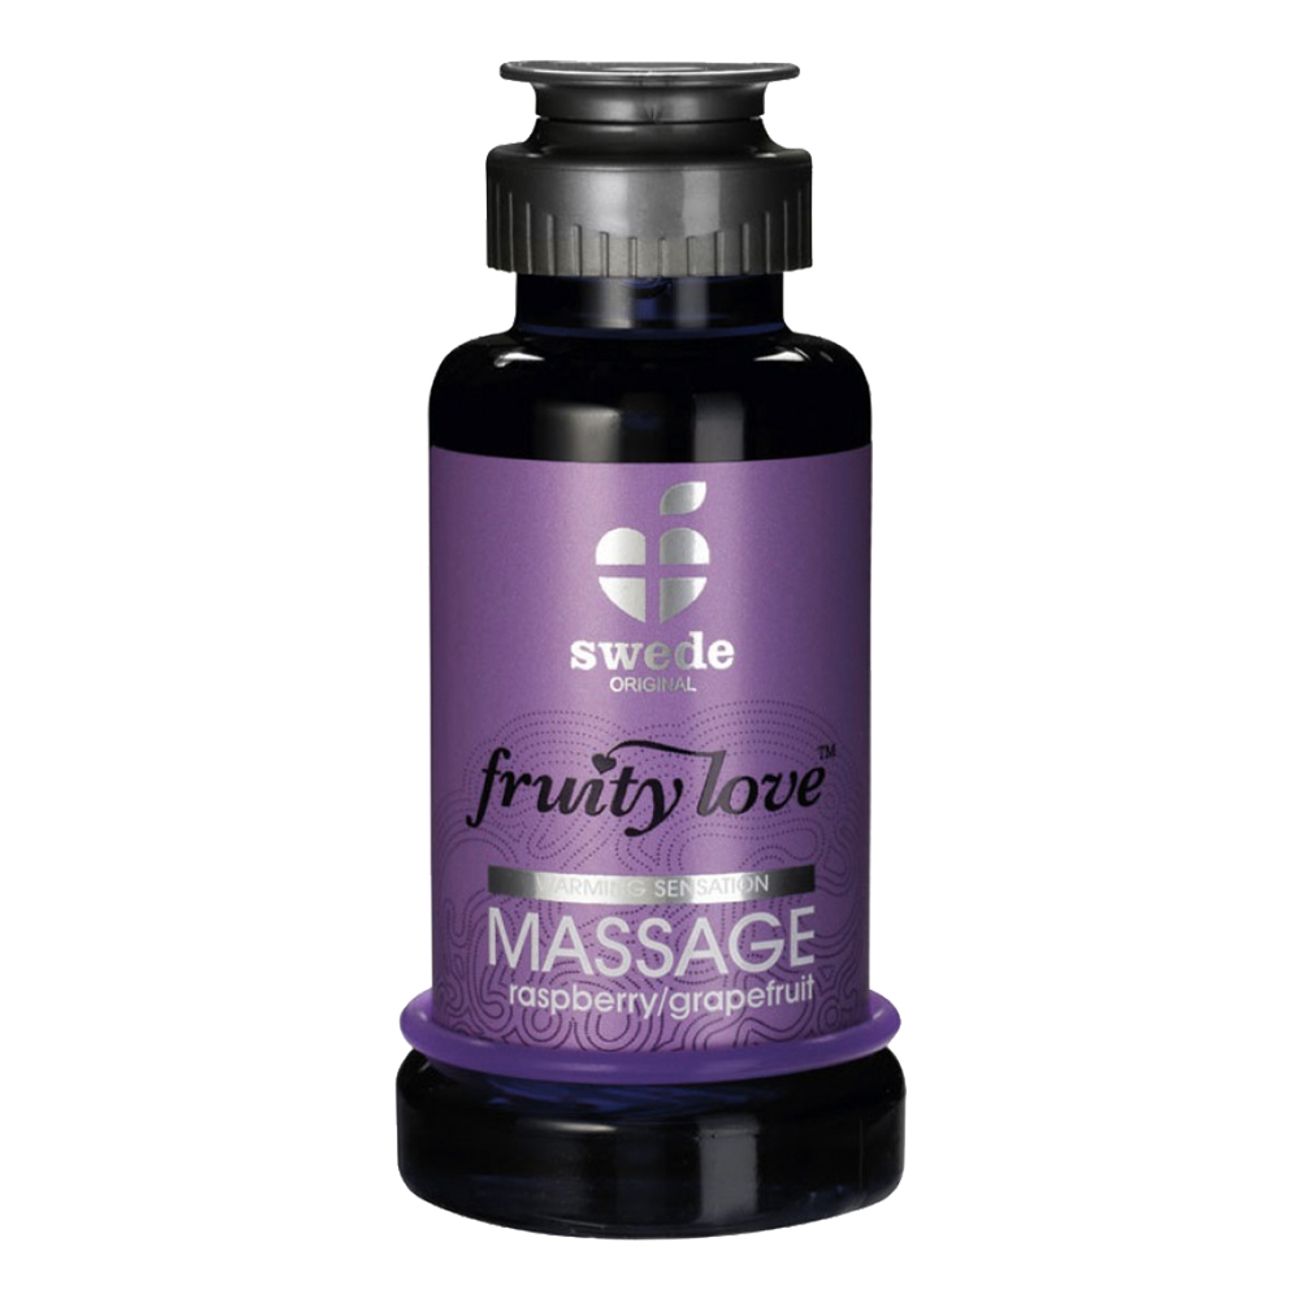 fruity-love-massage--1